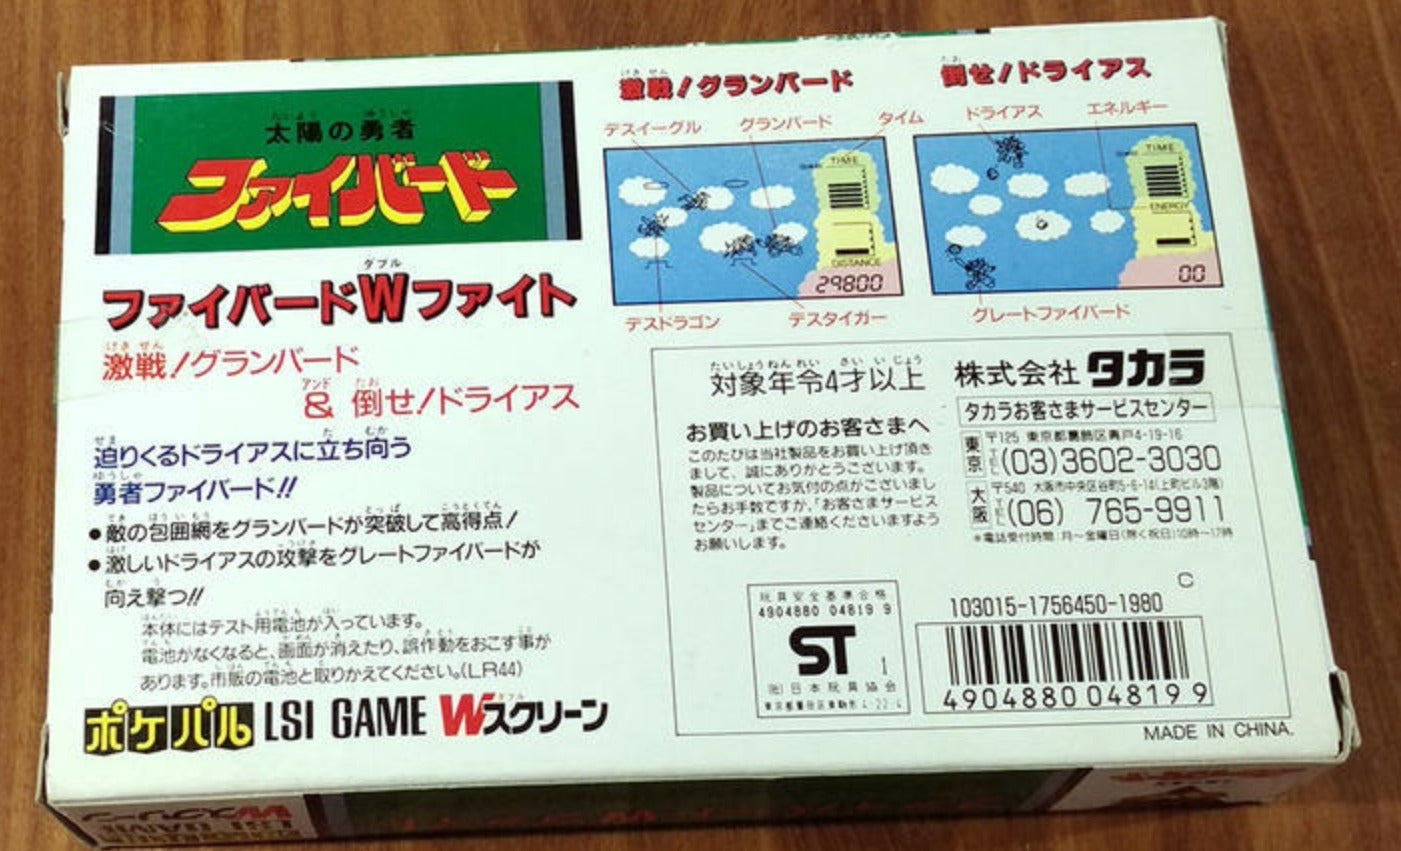 Takara 1991 Brave Fighter Of Sun Fightbird LCD LSI Electronic Handheld Game